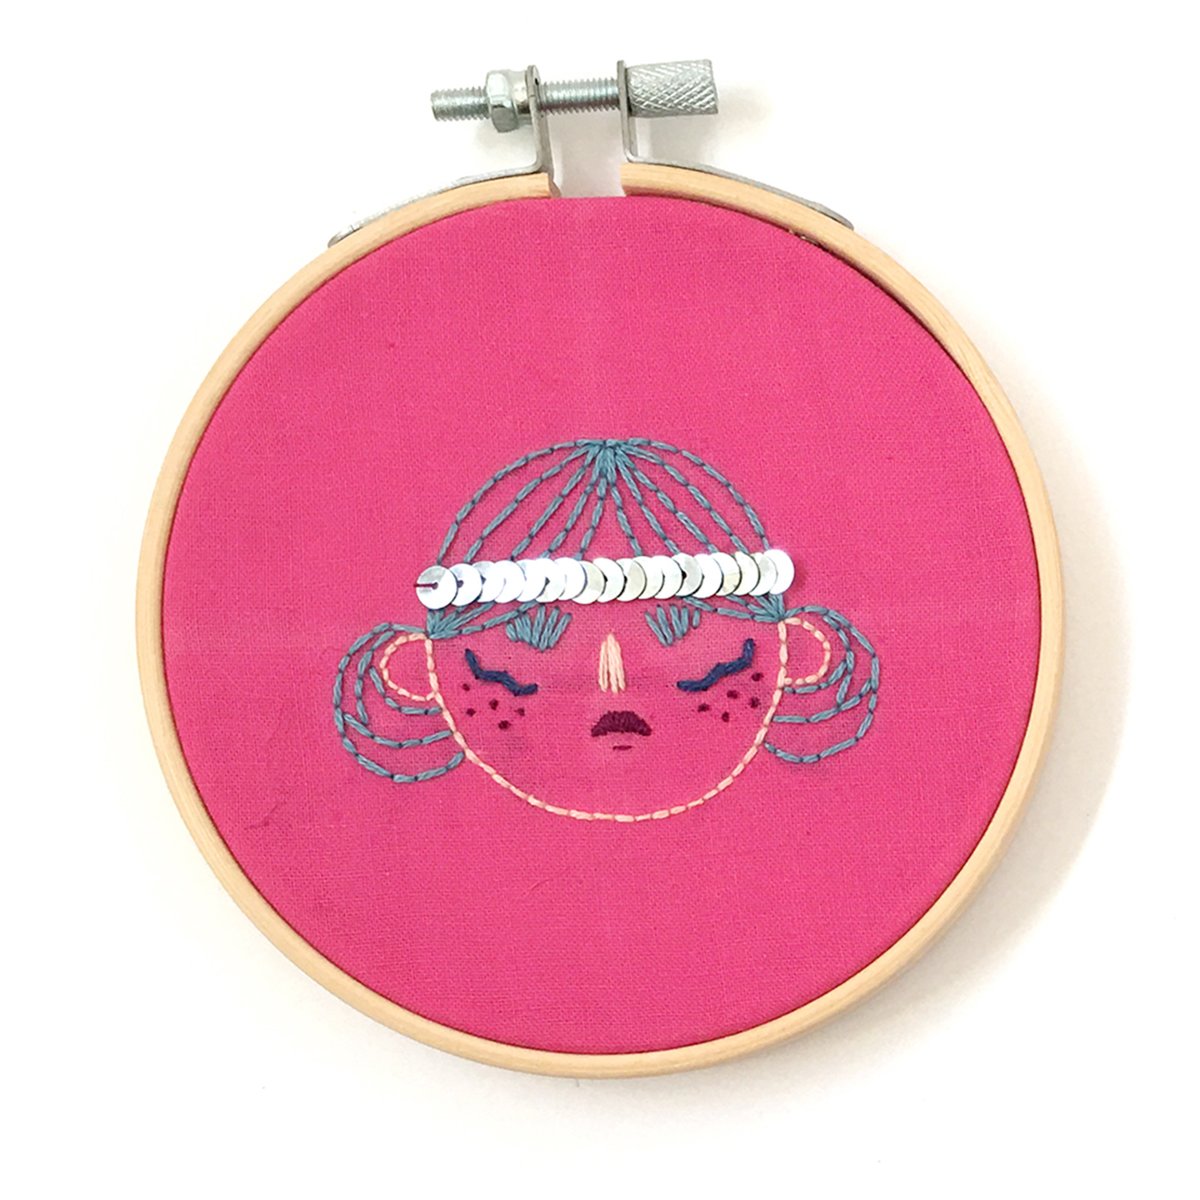 Embroidery frame - Madame